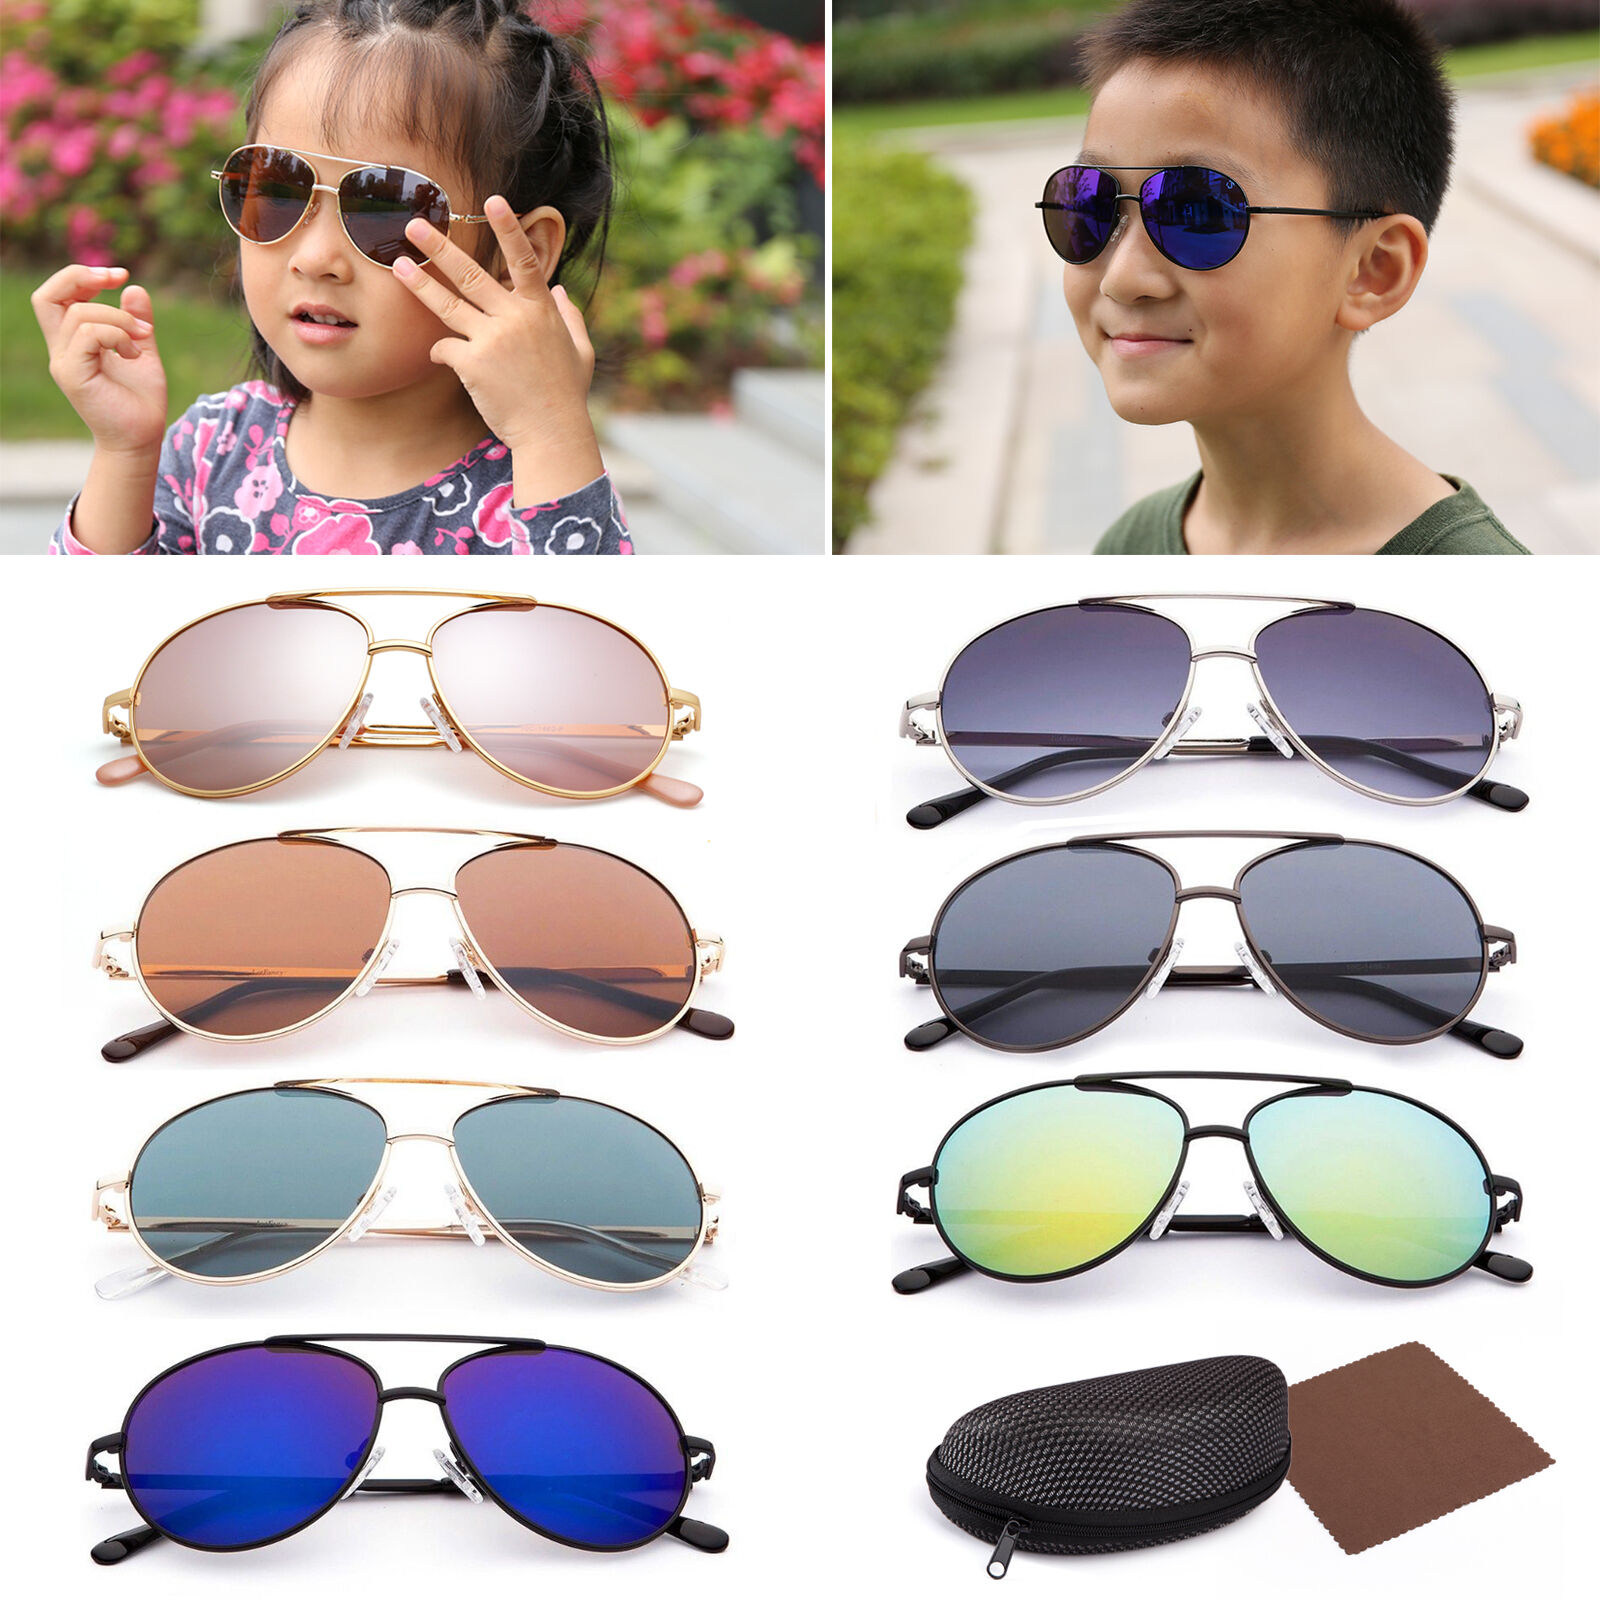 Vintage Aviator Sunglasses For Boys Girls Kids Child Toddler Baby Eyewear Case